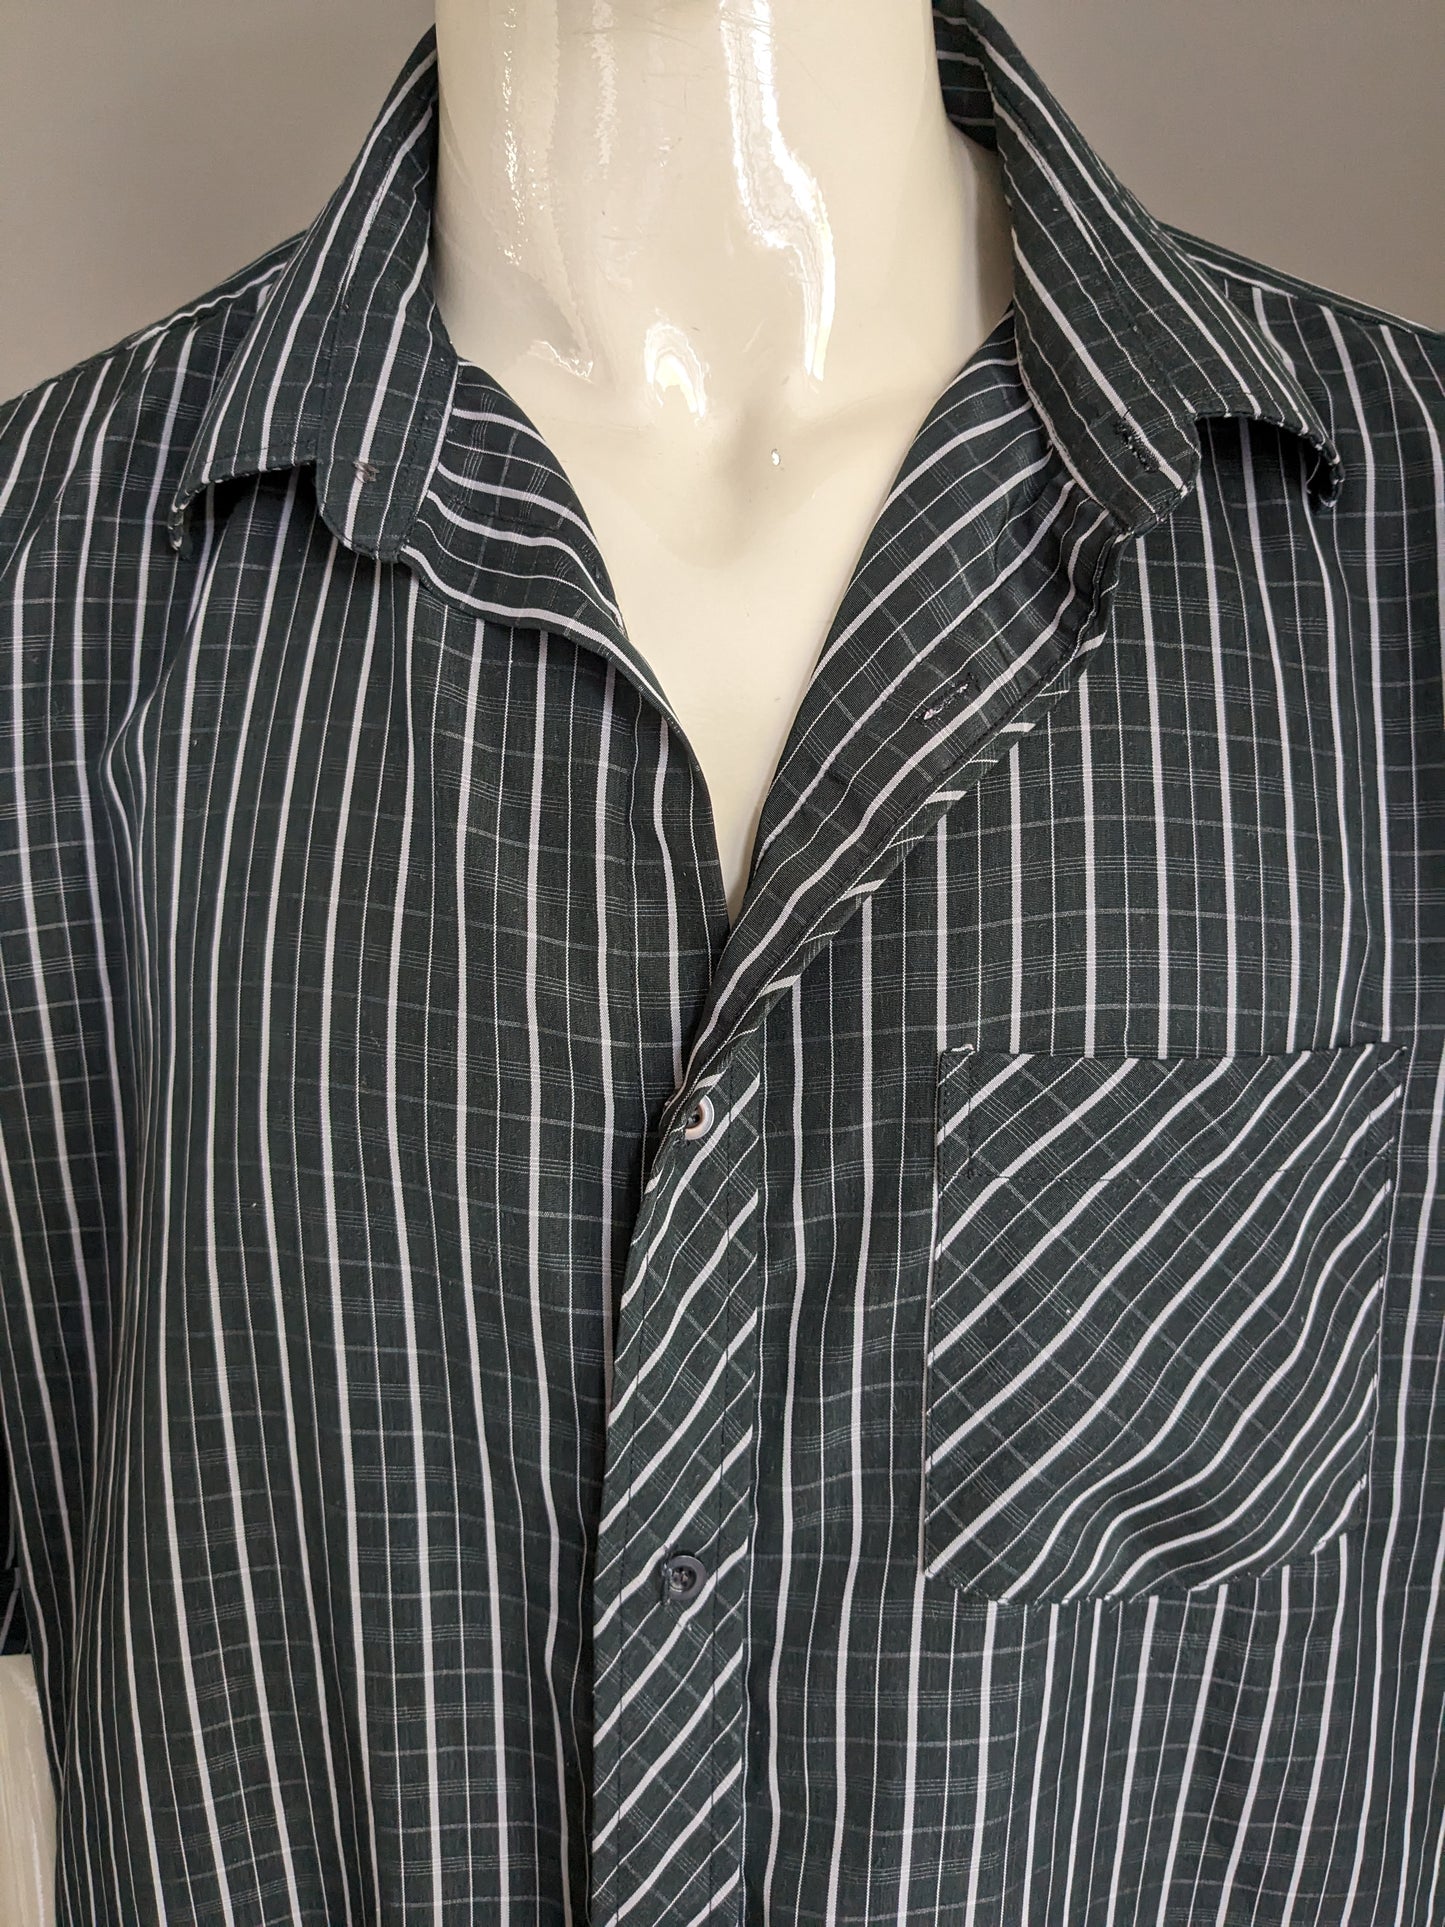 F&F Shirt Short Sleeve. À carreaux gris noir. Taille xxxl / 3xl.